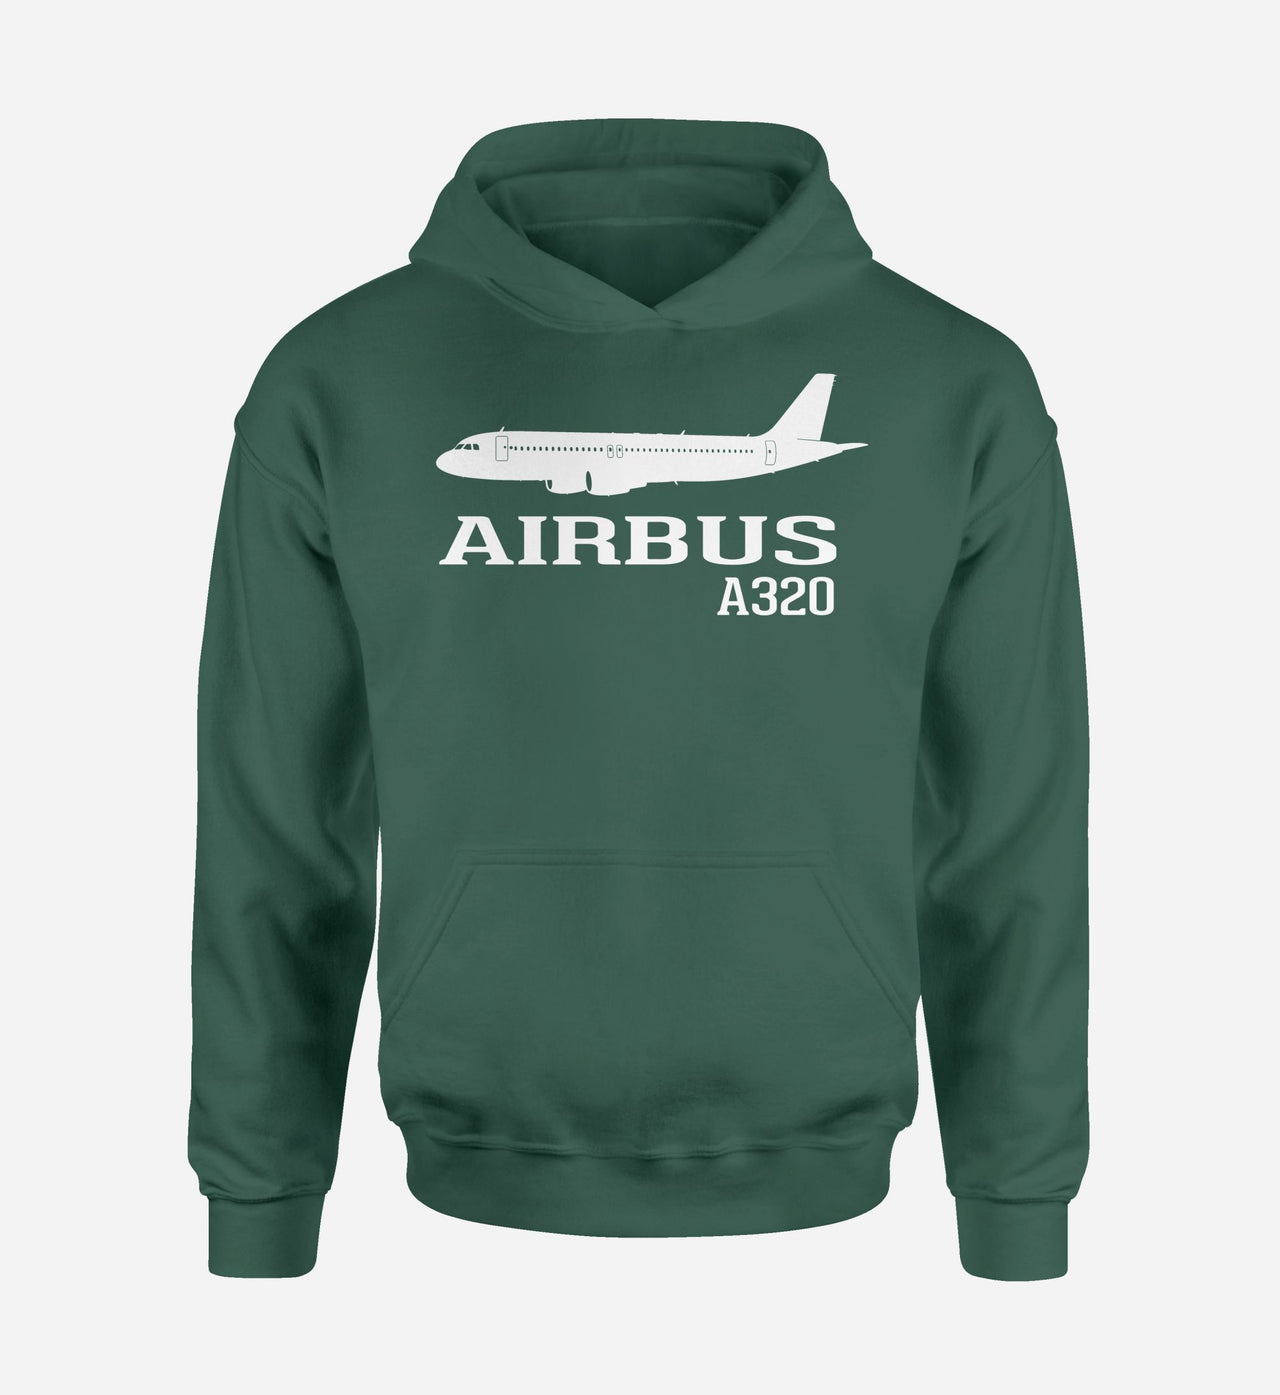 Airbus A320 Printed Designed Hoodies